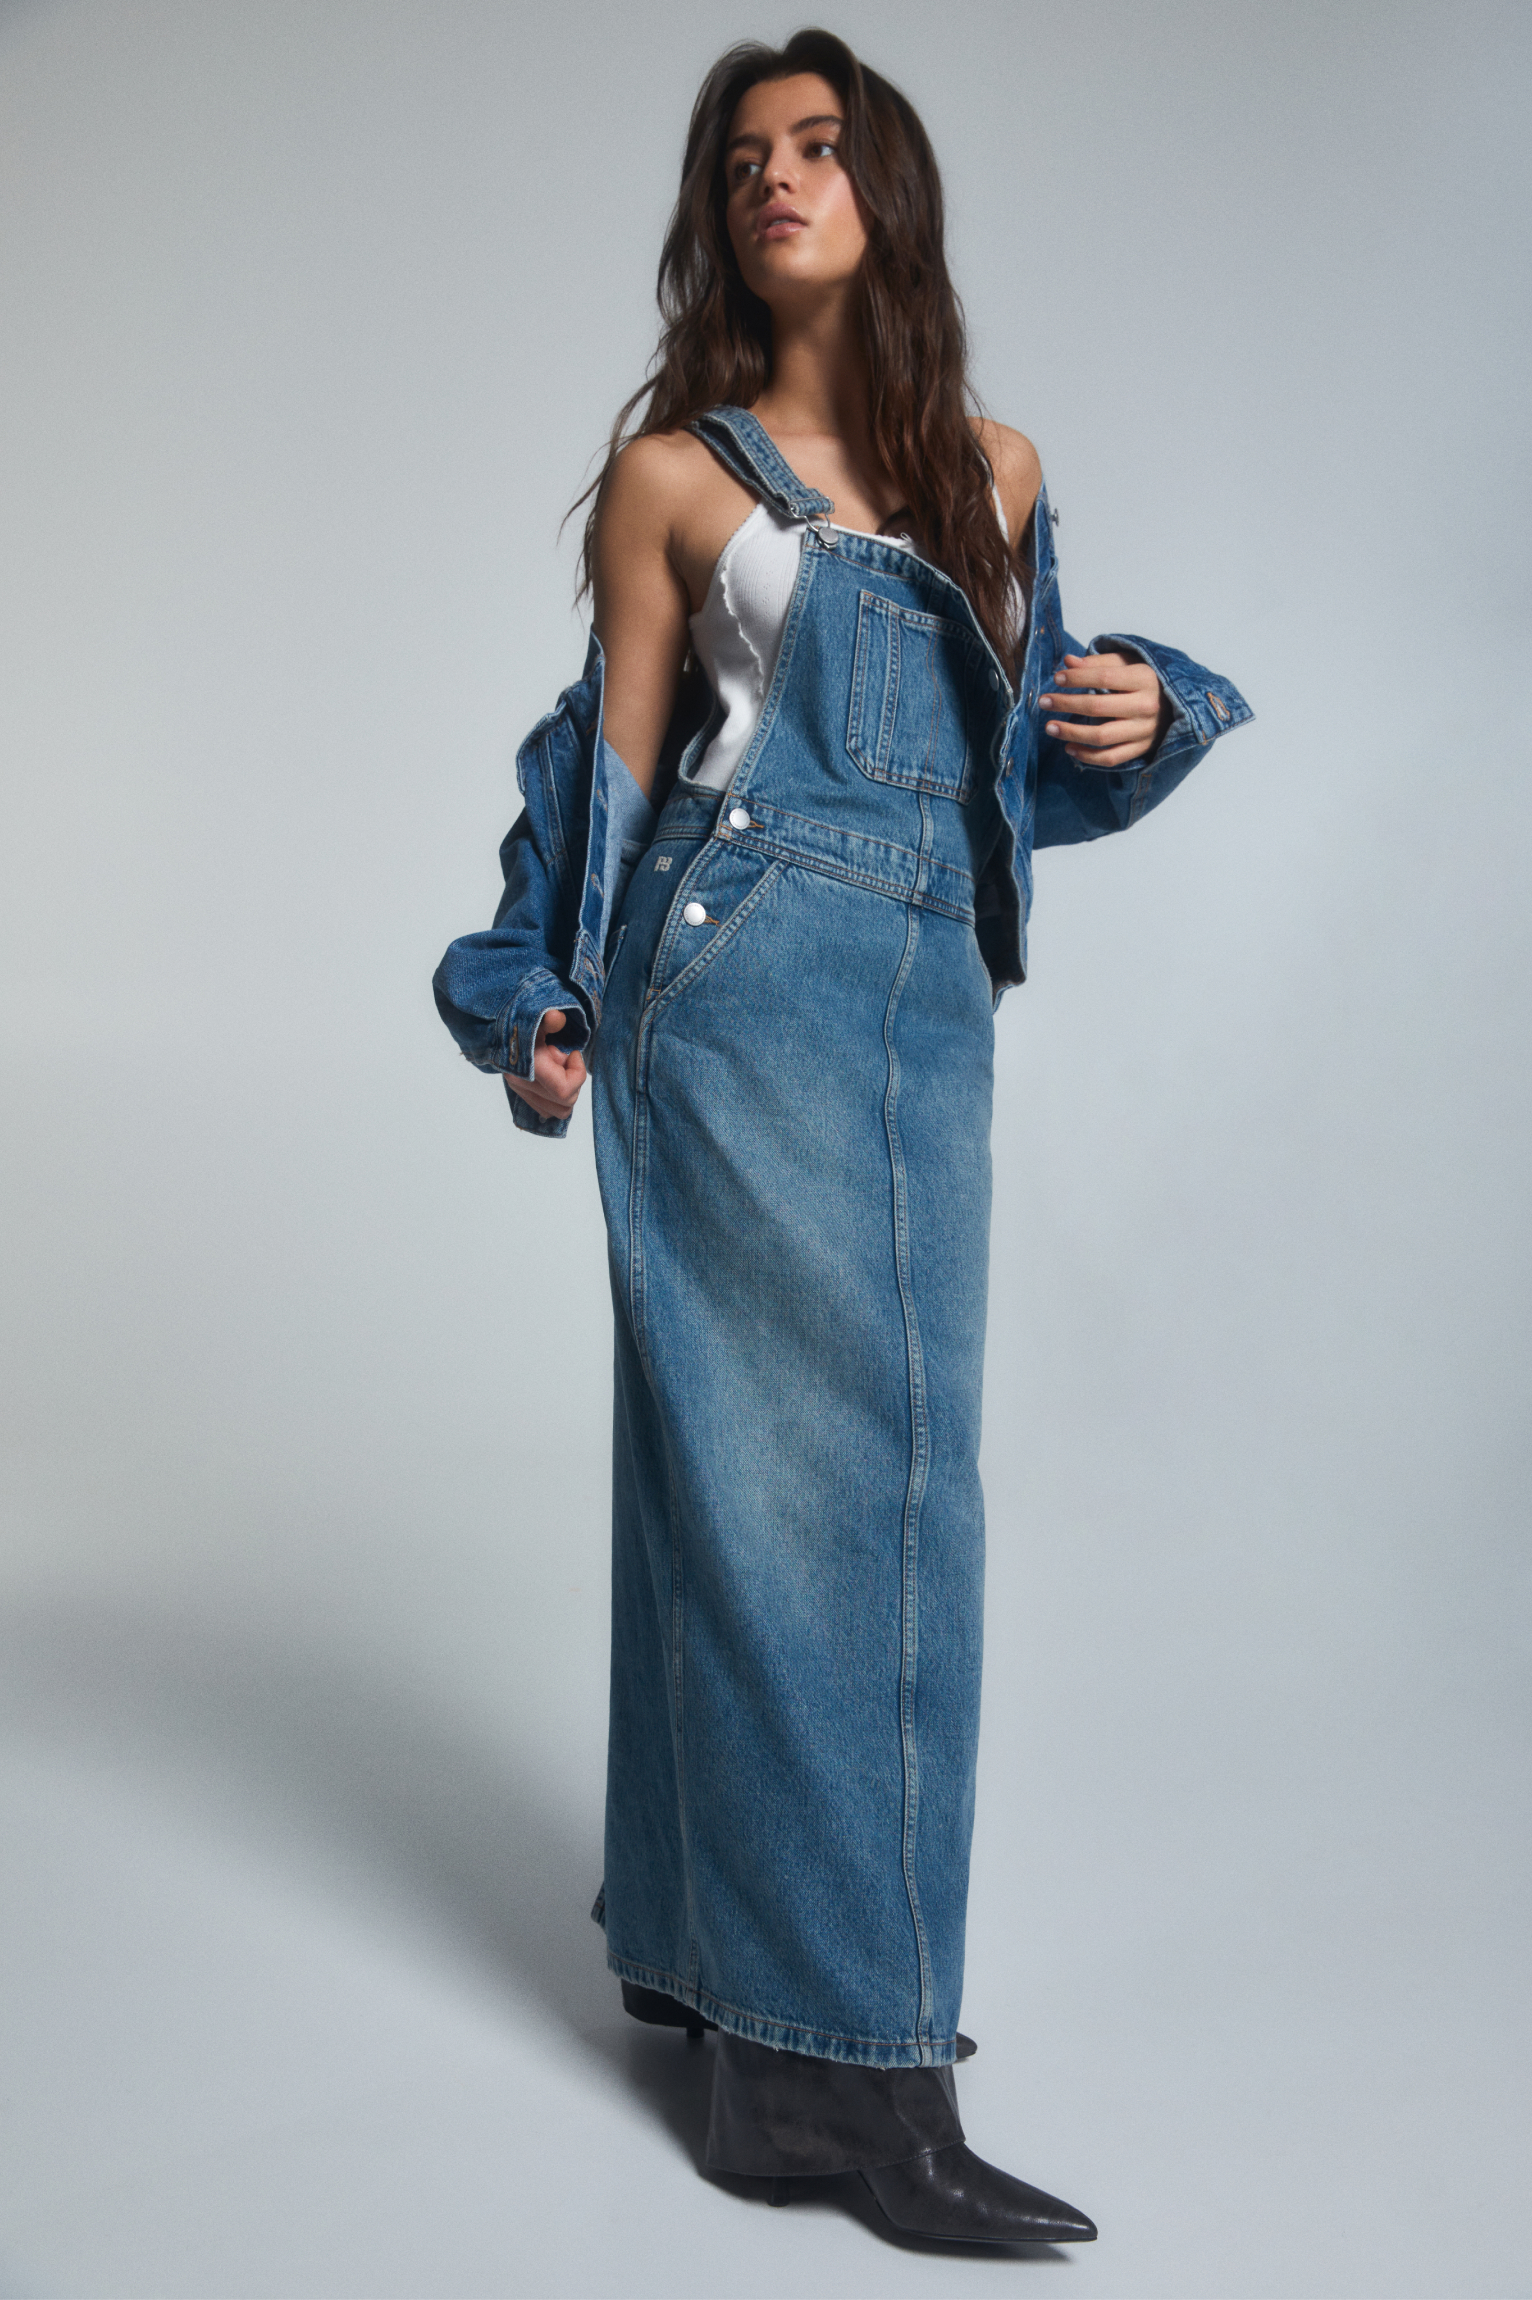 Women Pants Playsuit Romper Jumpsuit One-piece Overall Clubwear Long  Elegant New | eBay